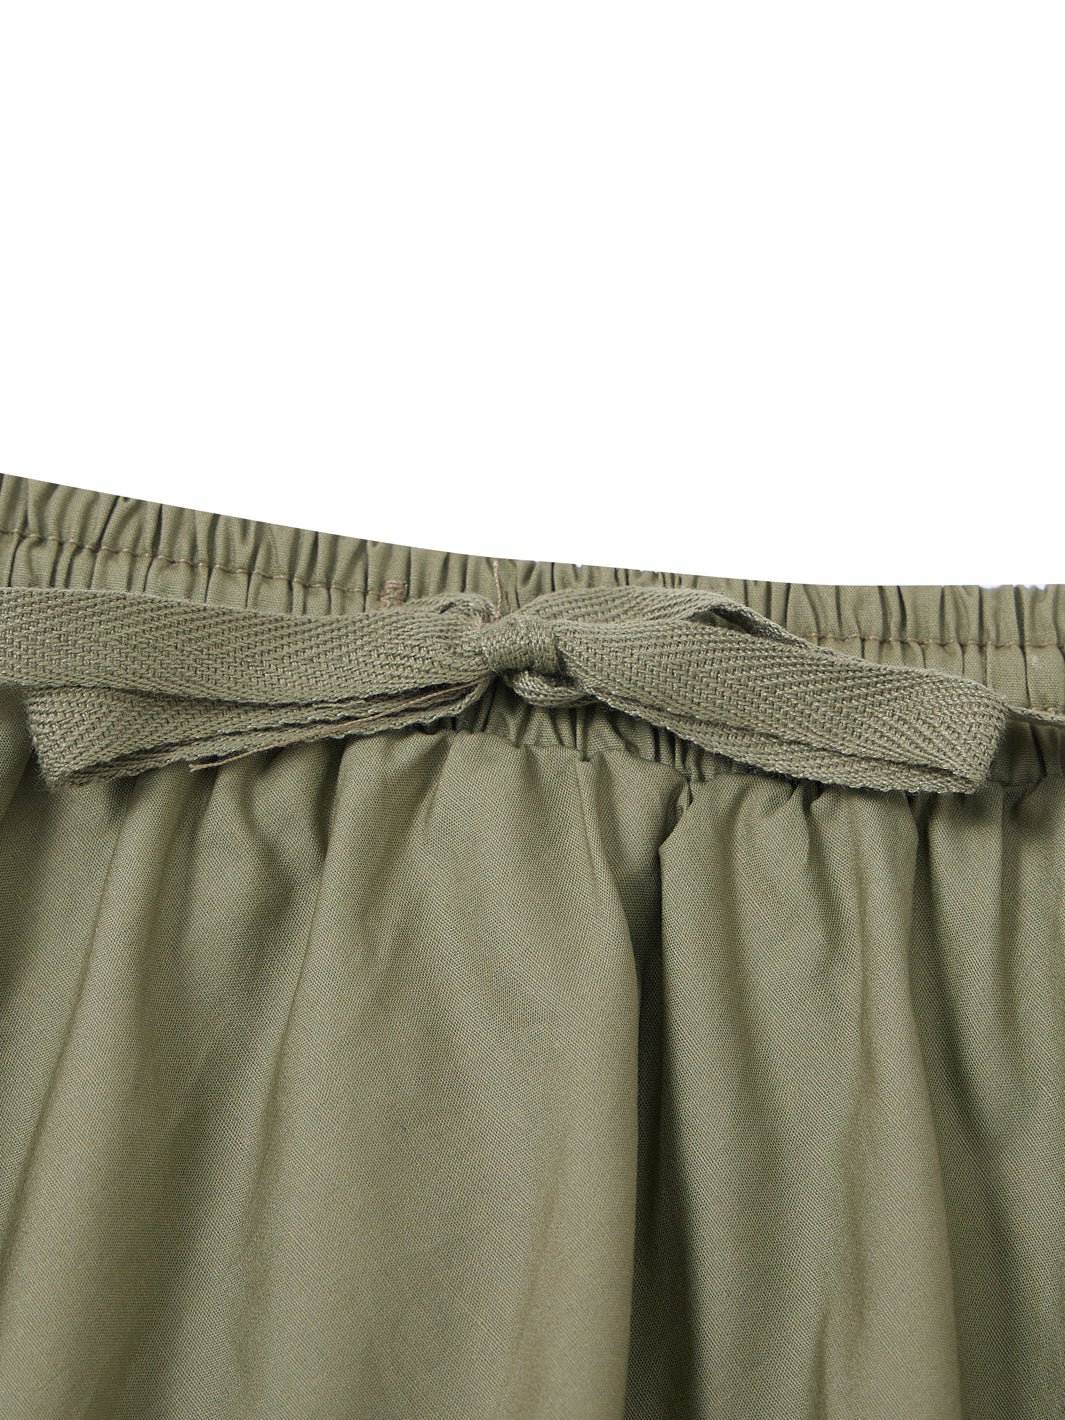 Solid A-line Skirt - Khaki